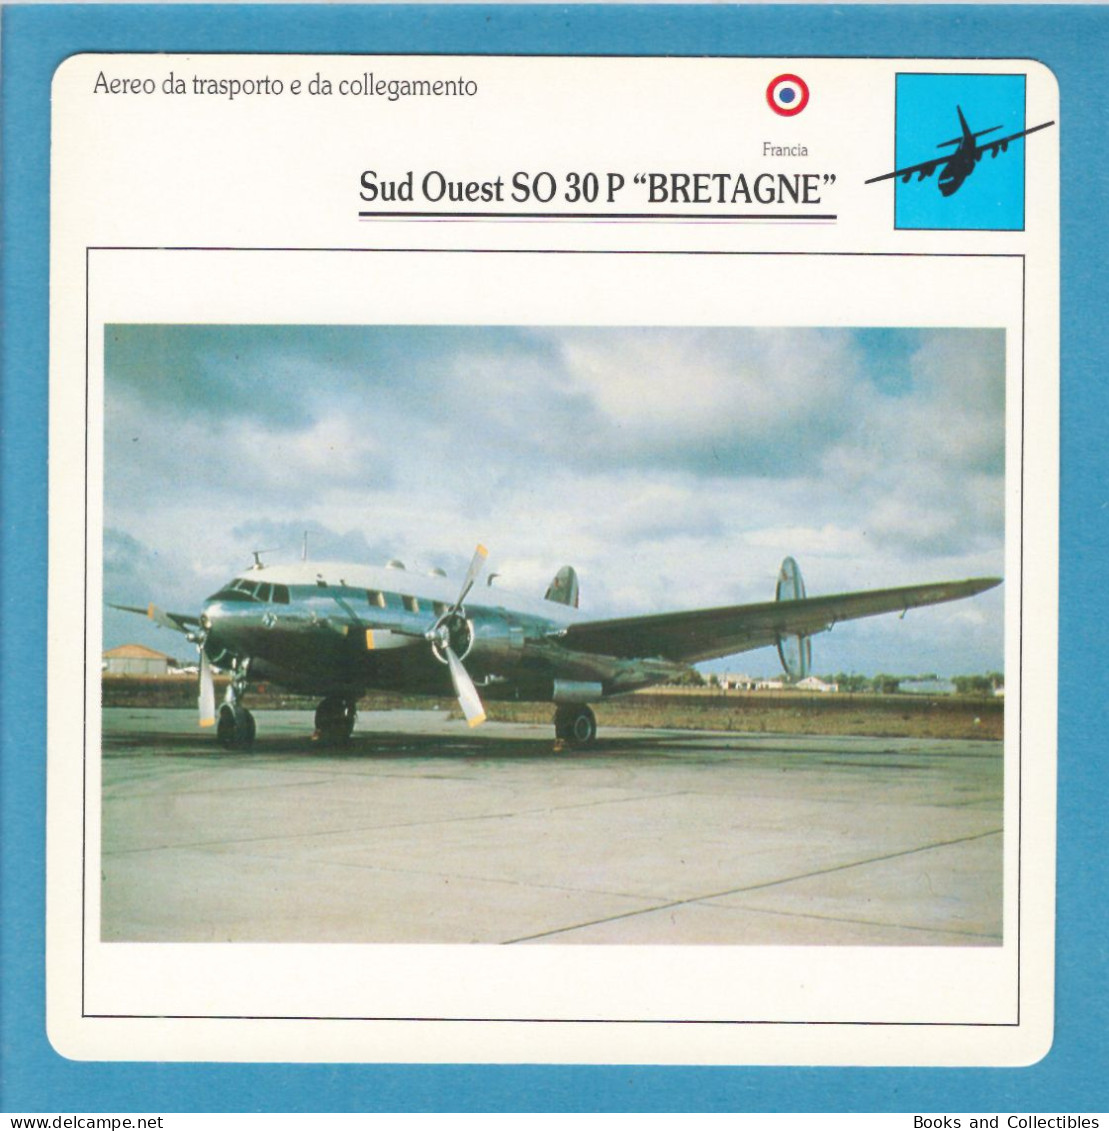 DeAgostini Educational Sheet "Warplanes" / Sud Ouest SW 30 P "BRETAGNE" (France) - Aviation